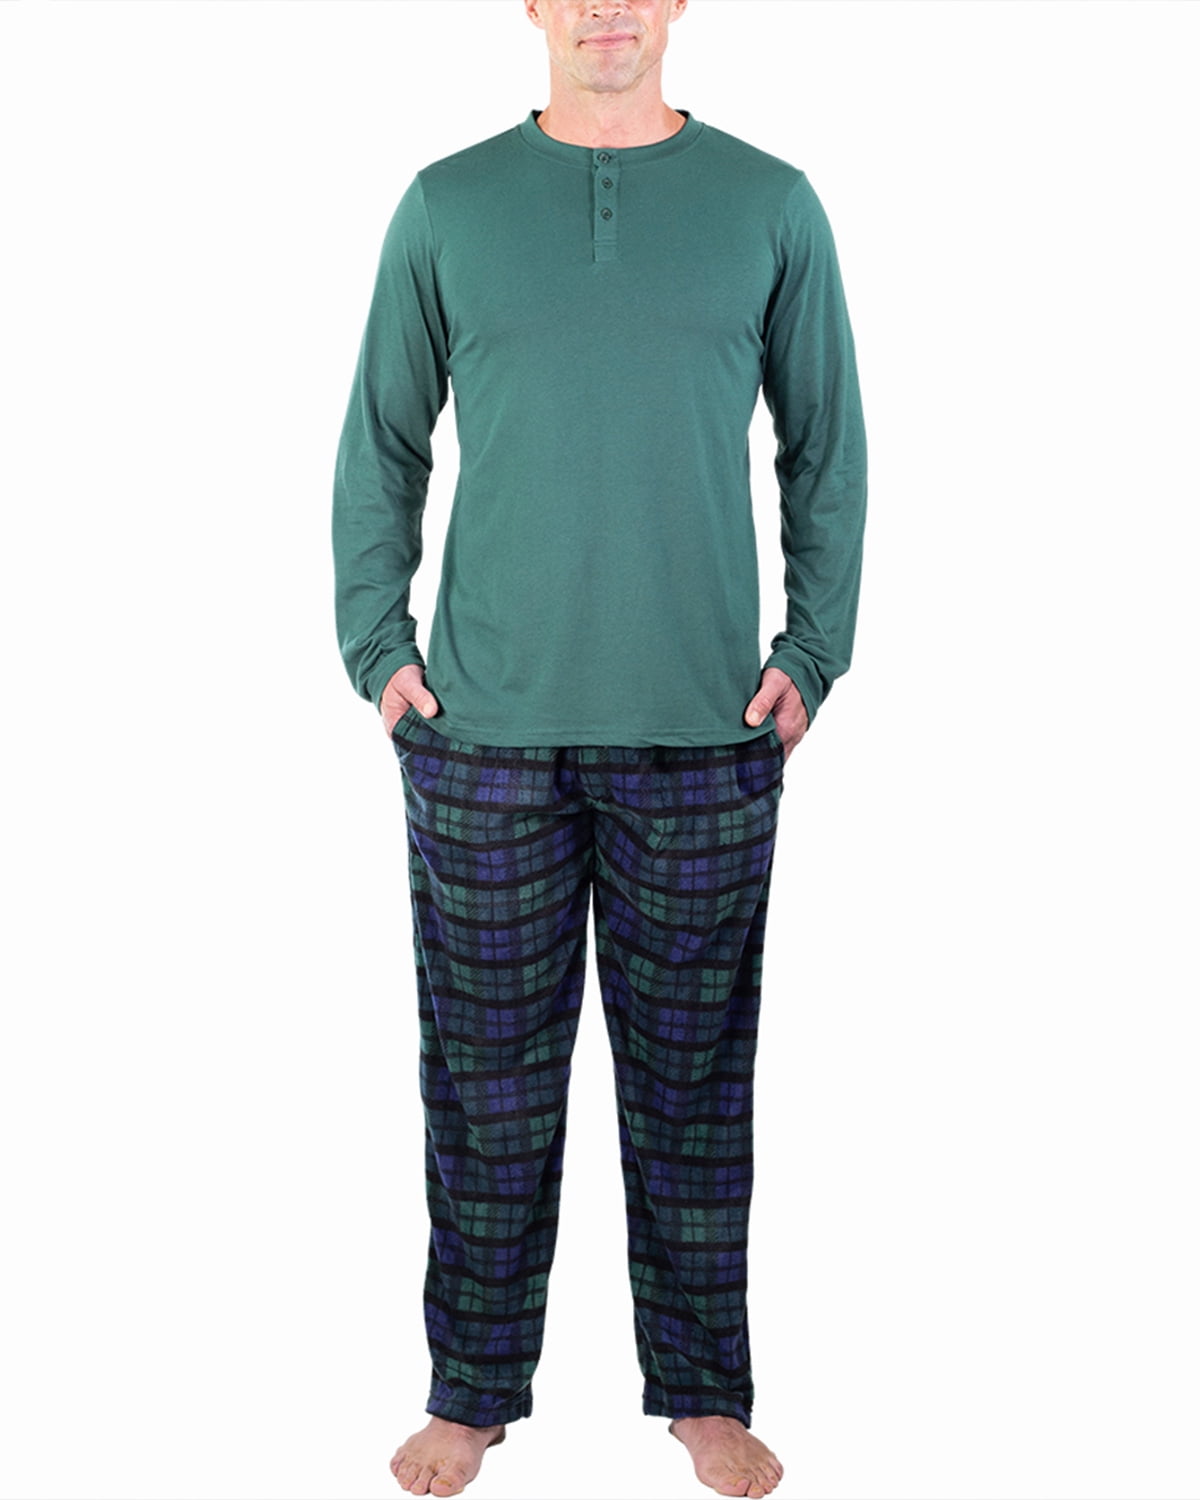 Irevial Mens Pyjamas Sets Cotton Long Sleeve Pjs Loungewear Sleepwear Nightwear Top & Bottoms Outfits 